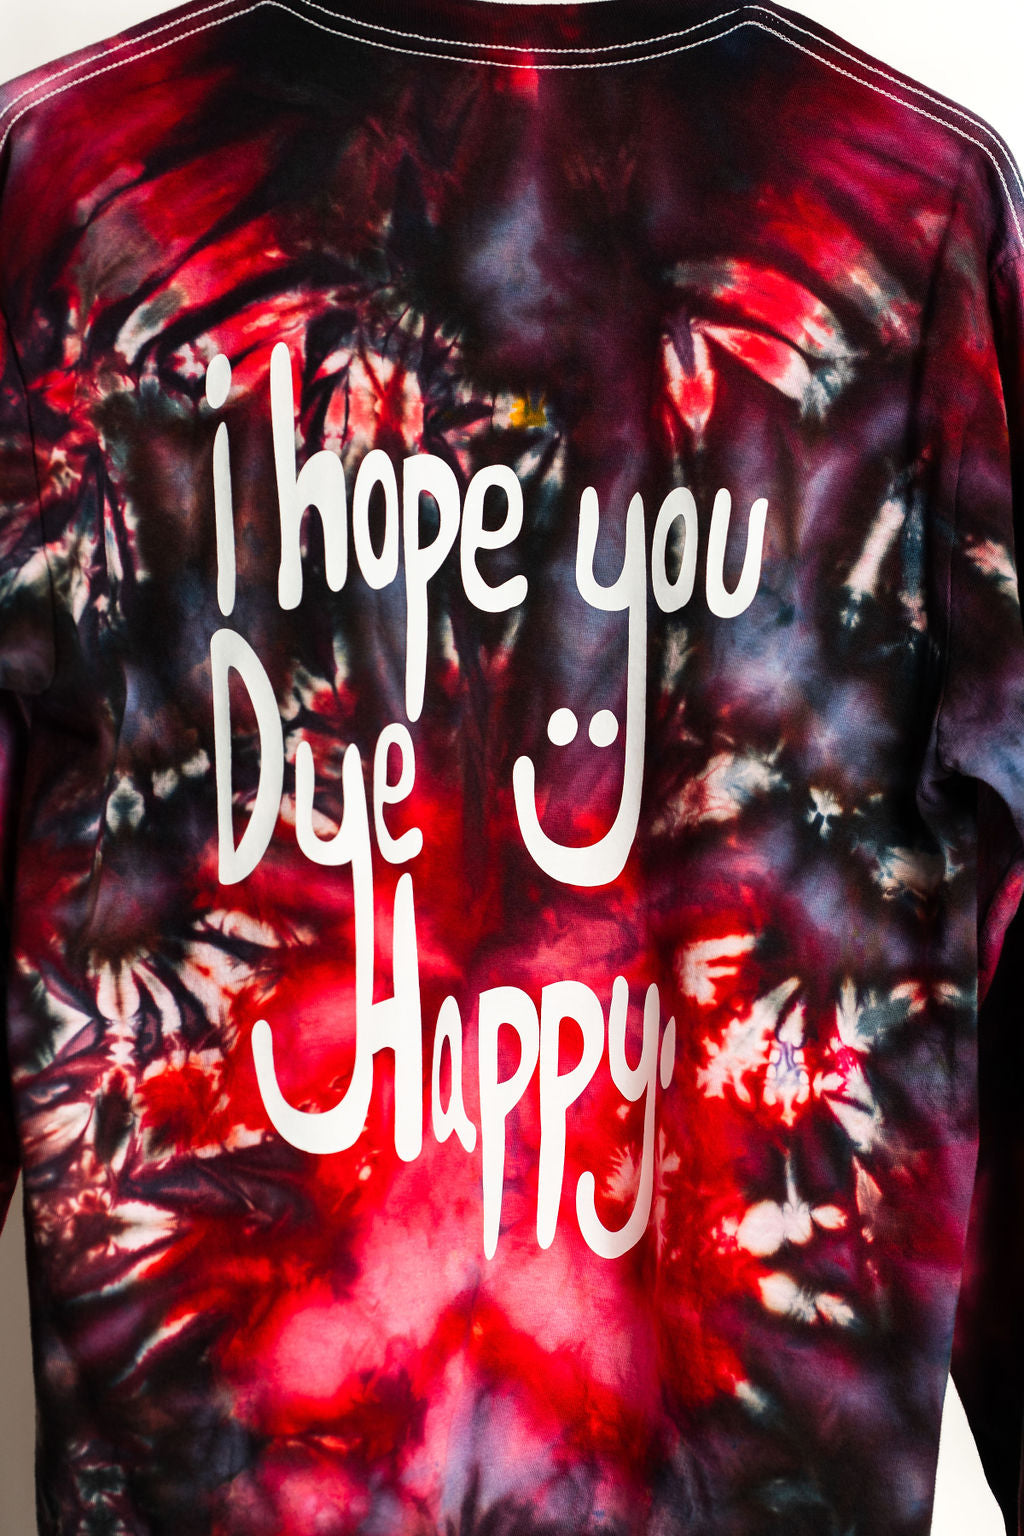 Red & Black "I Hope You Dye Happy" Tie Dye Shirt